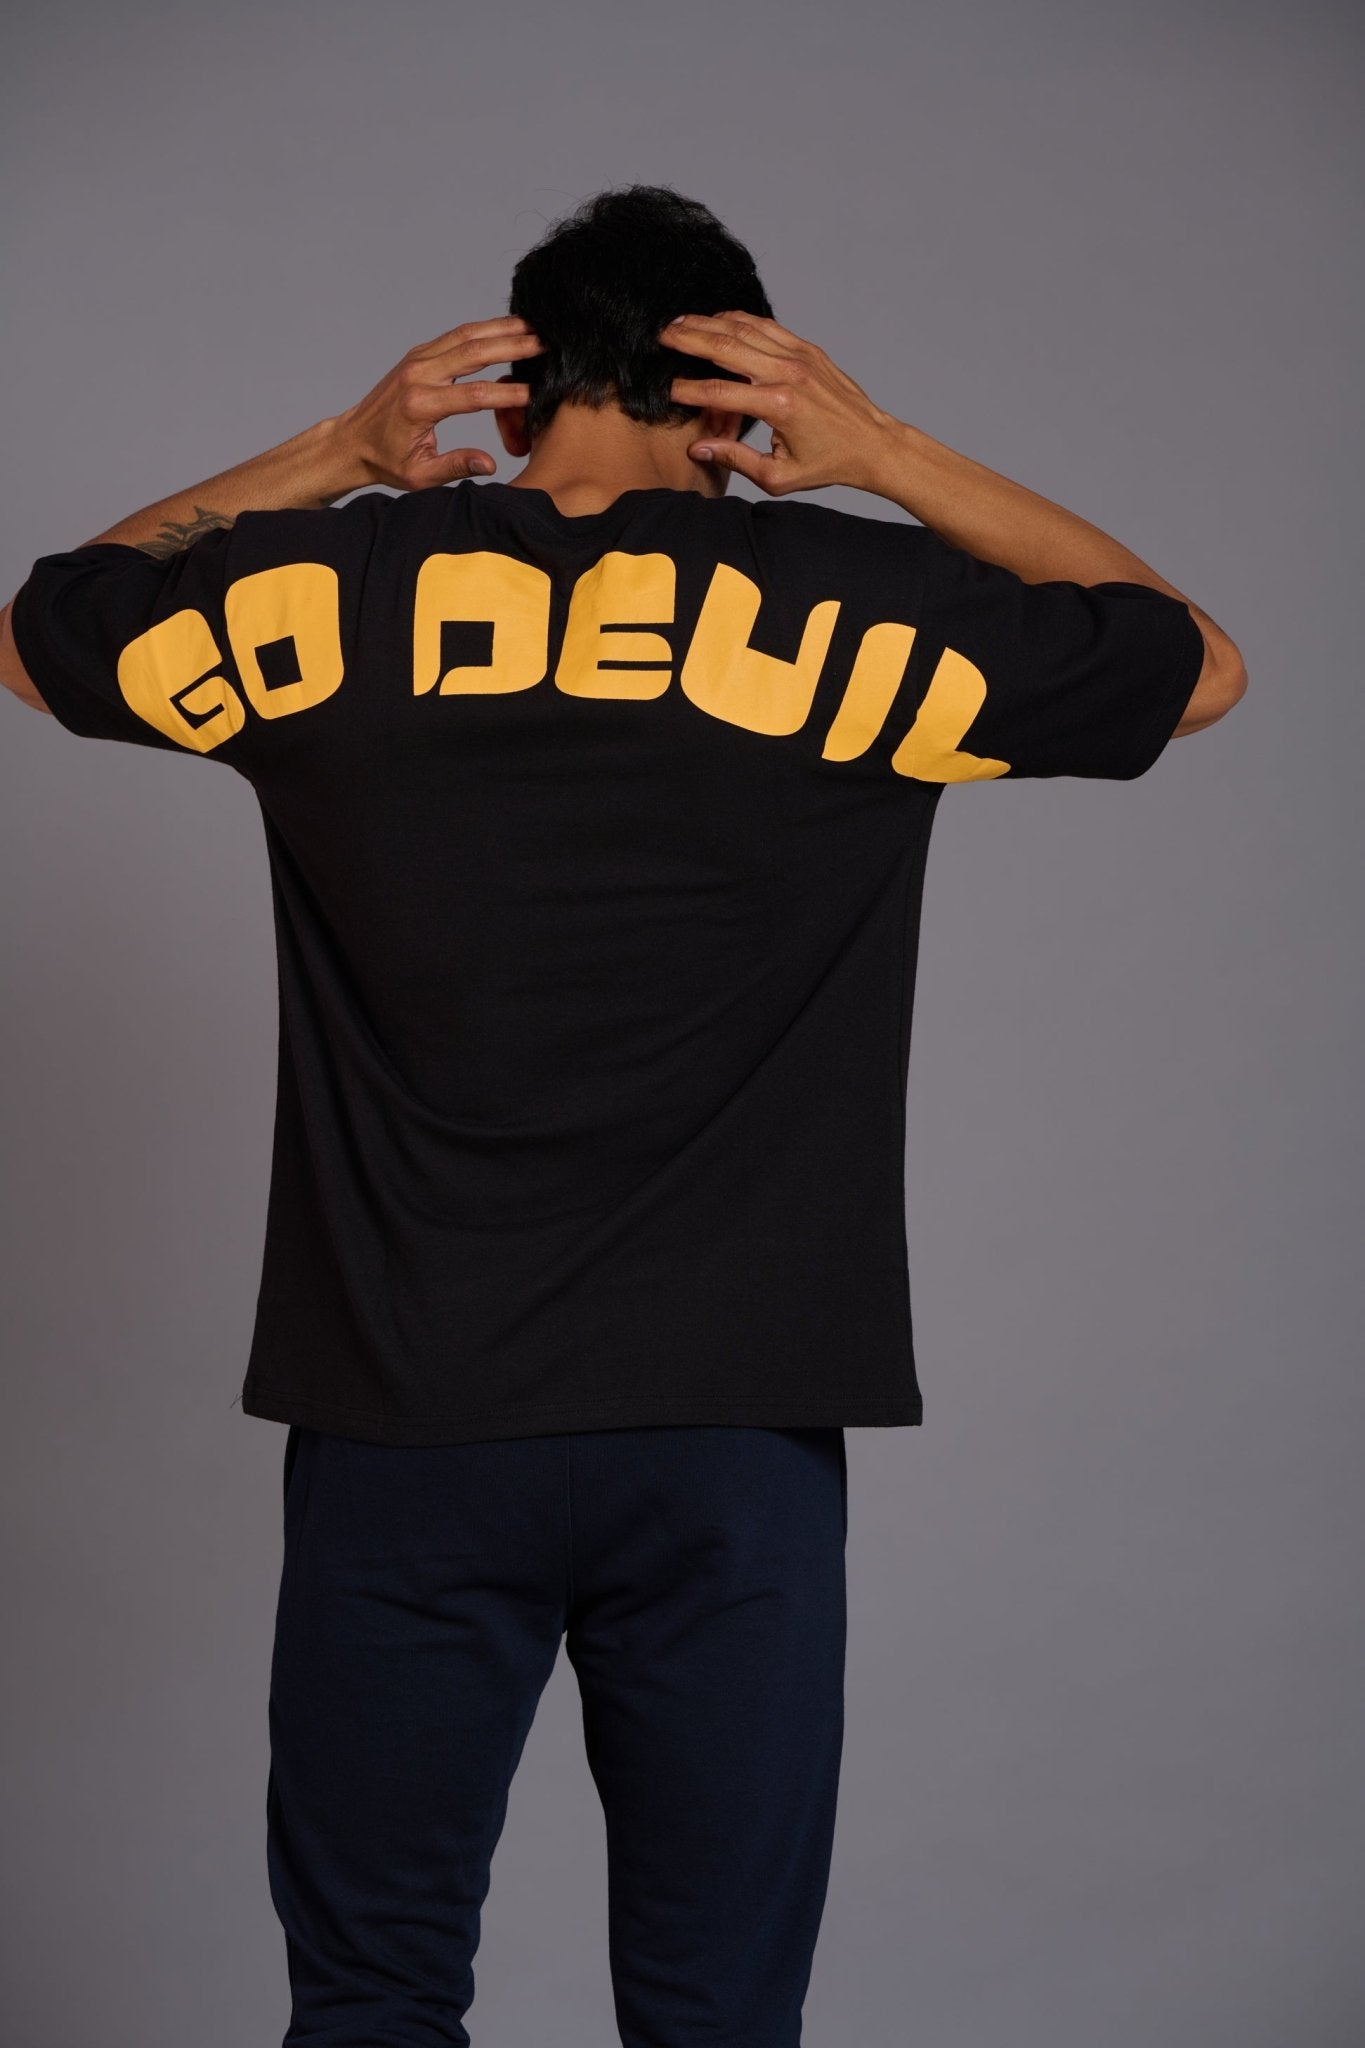 Yellow Go Devil Printed Black Over Size T-Shirt - Go Devil